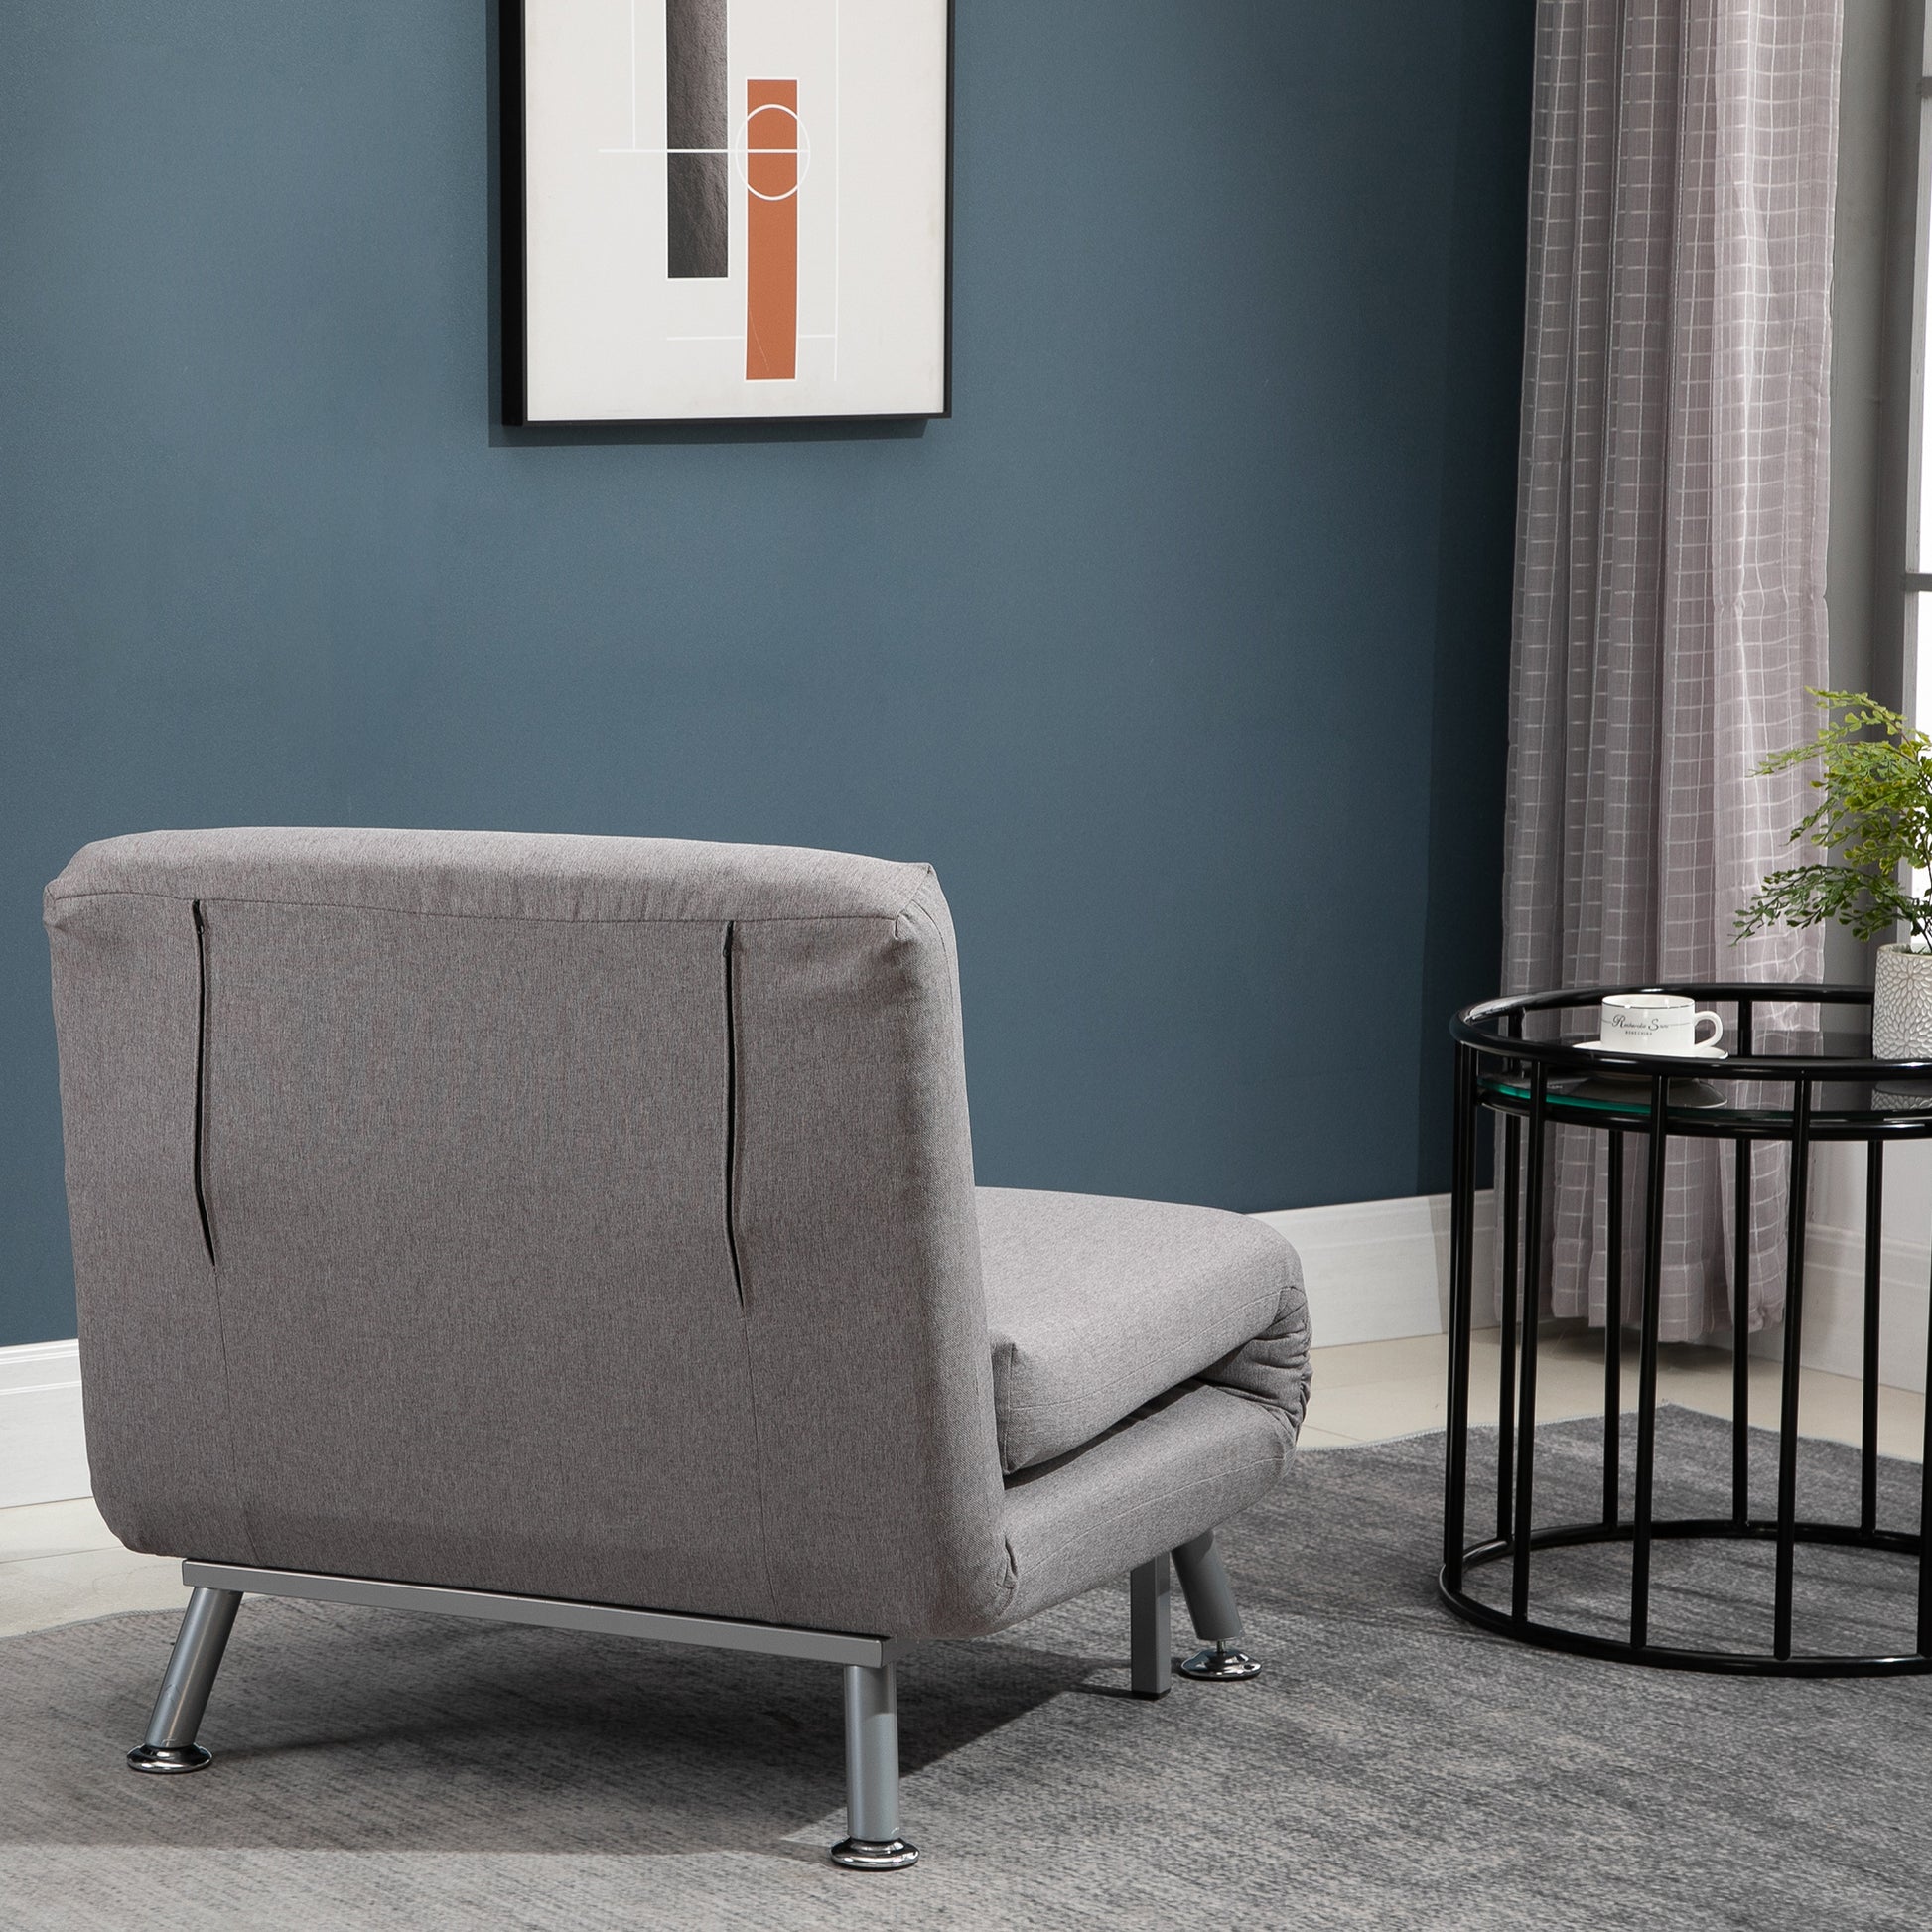 Single Sofa Bed Futon Chair Sleeper, Foldable Portable Lounge Couch, Living Room Furniture, Grey, HOMCOM, 8